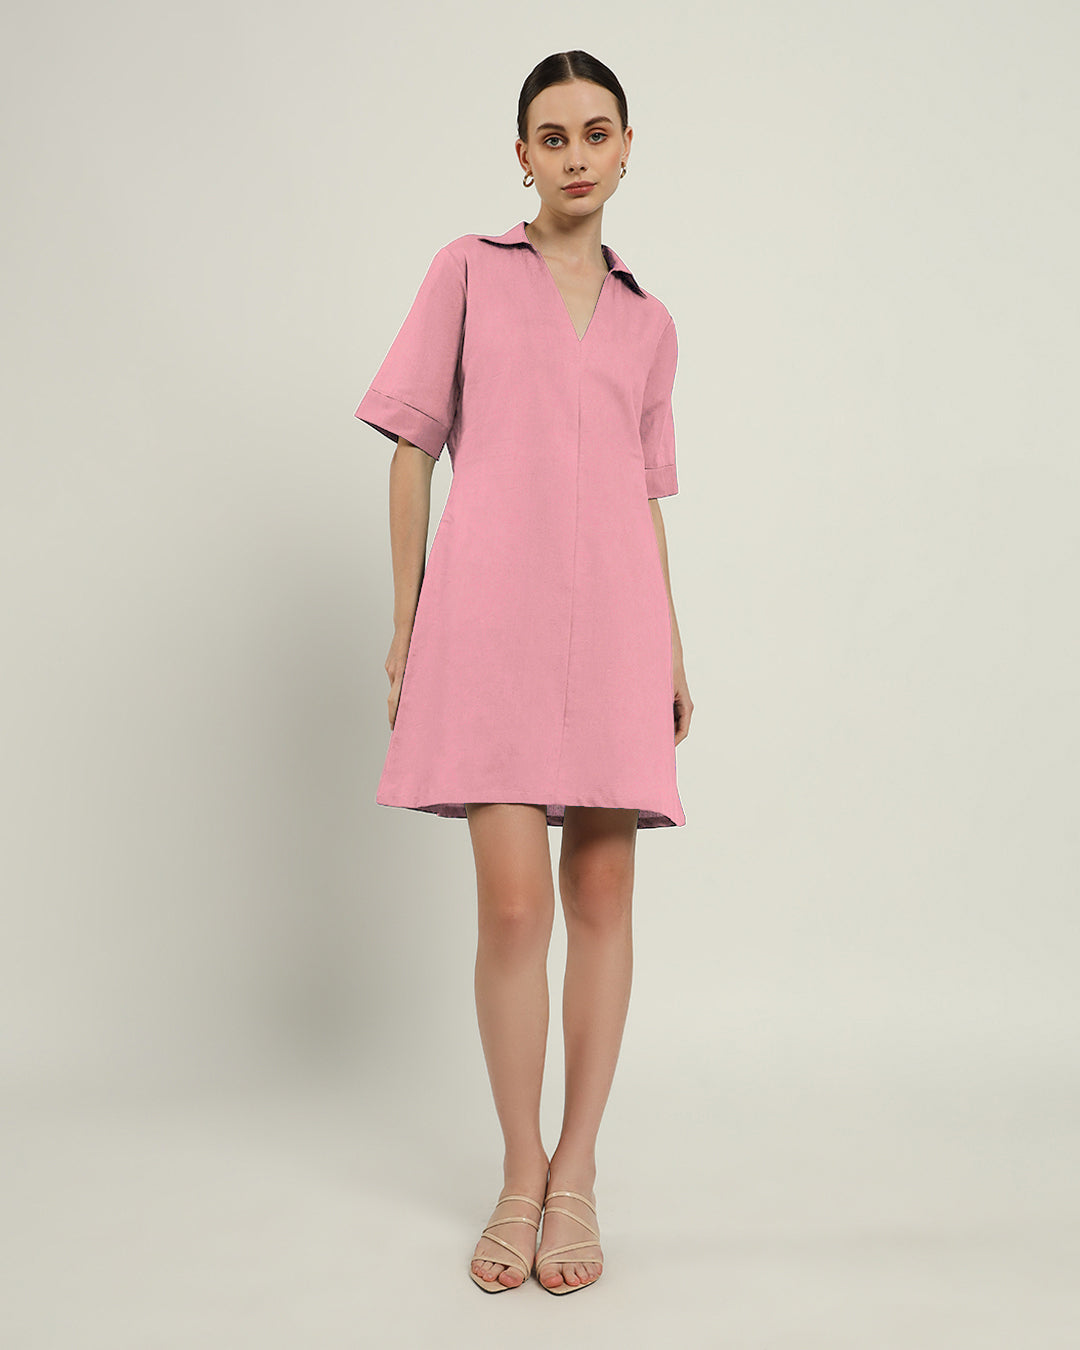 The Ermont Fondant Pink Cotton Dress